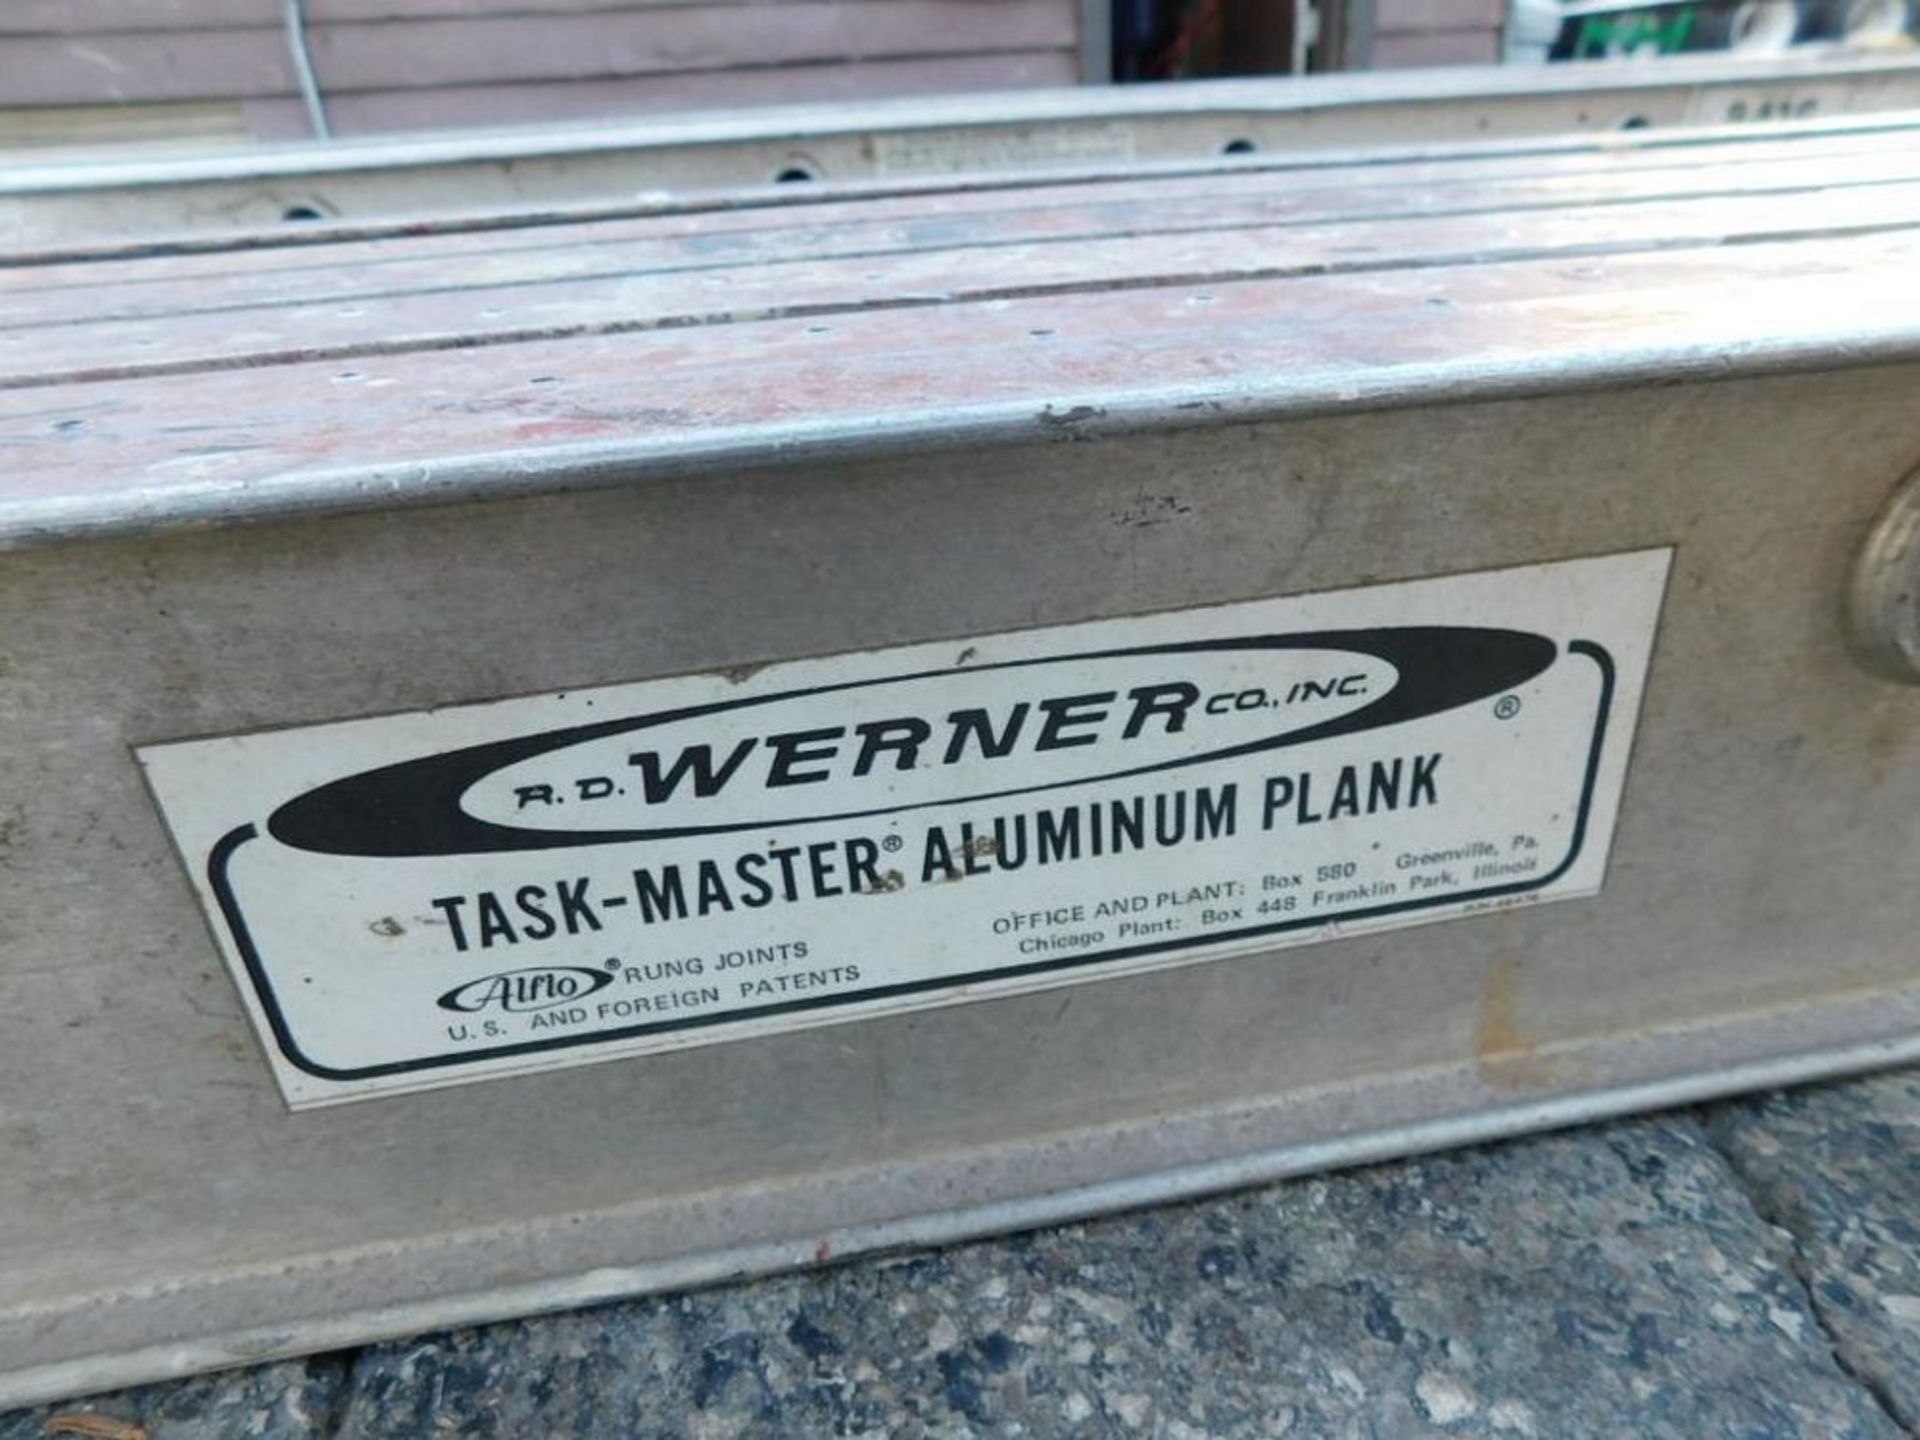 Werner 16' x 14" Task Master Aluminum Plank, Model 2416, 500 lb. Cap. (LOCATION: 318 N. Milwaukee - Image 5 of 6